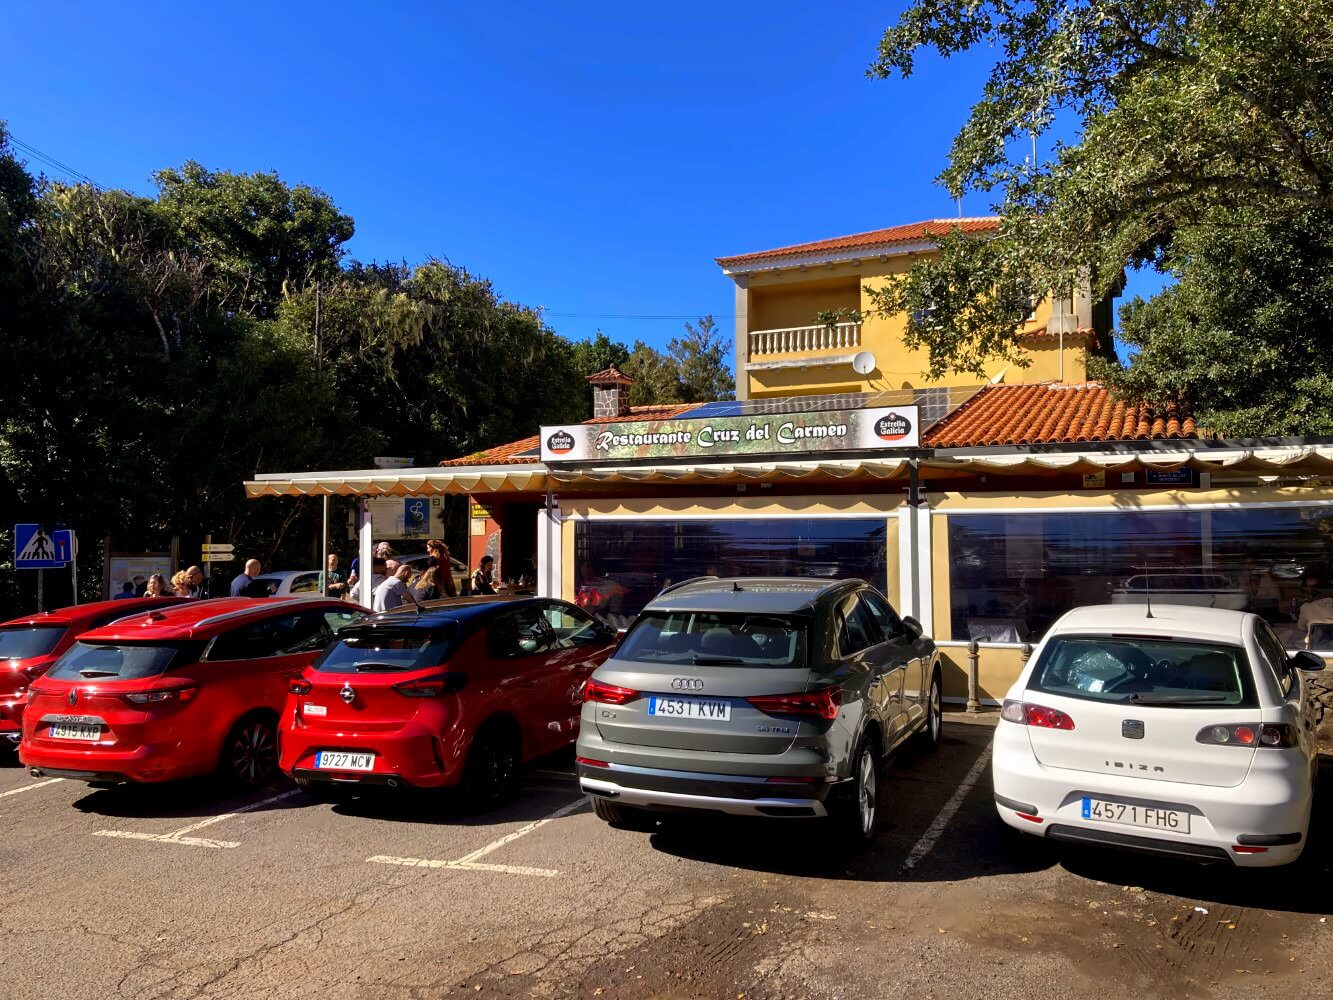 Restaurant Cruz del Carmen mit Parkplatz.